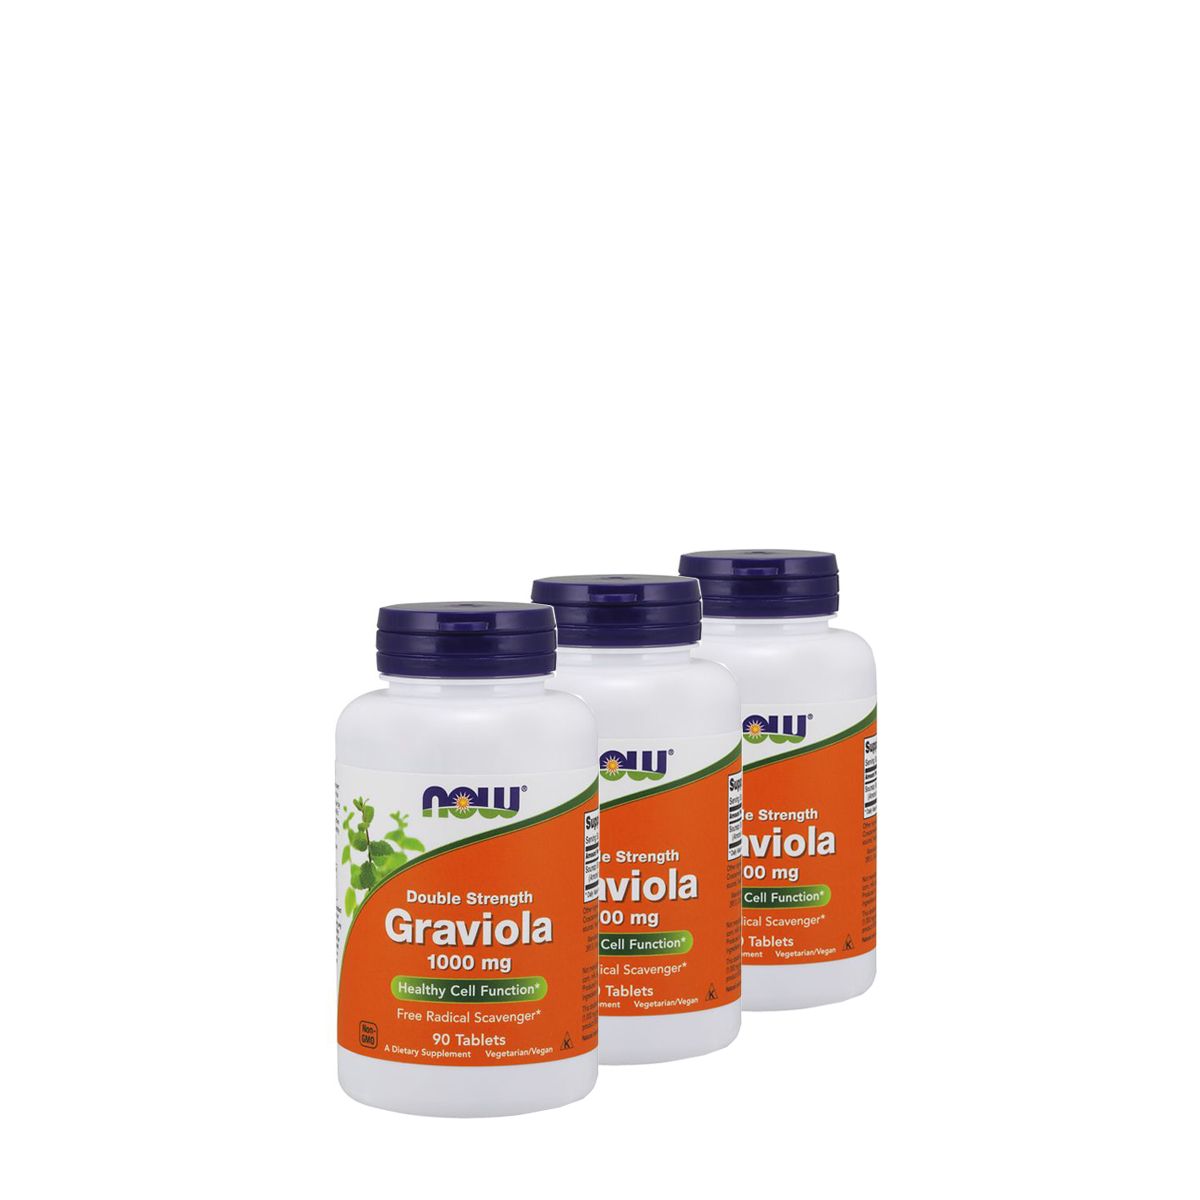 Dupla dózisú graviola 1000 mg, Now Double Strength Graviola, 3x90 tabletta